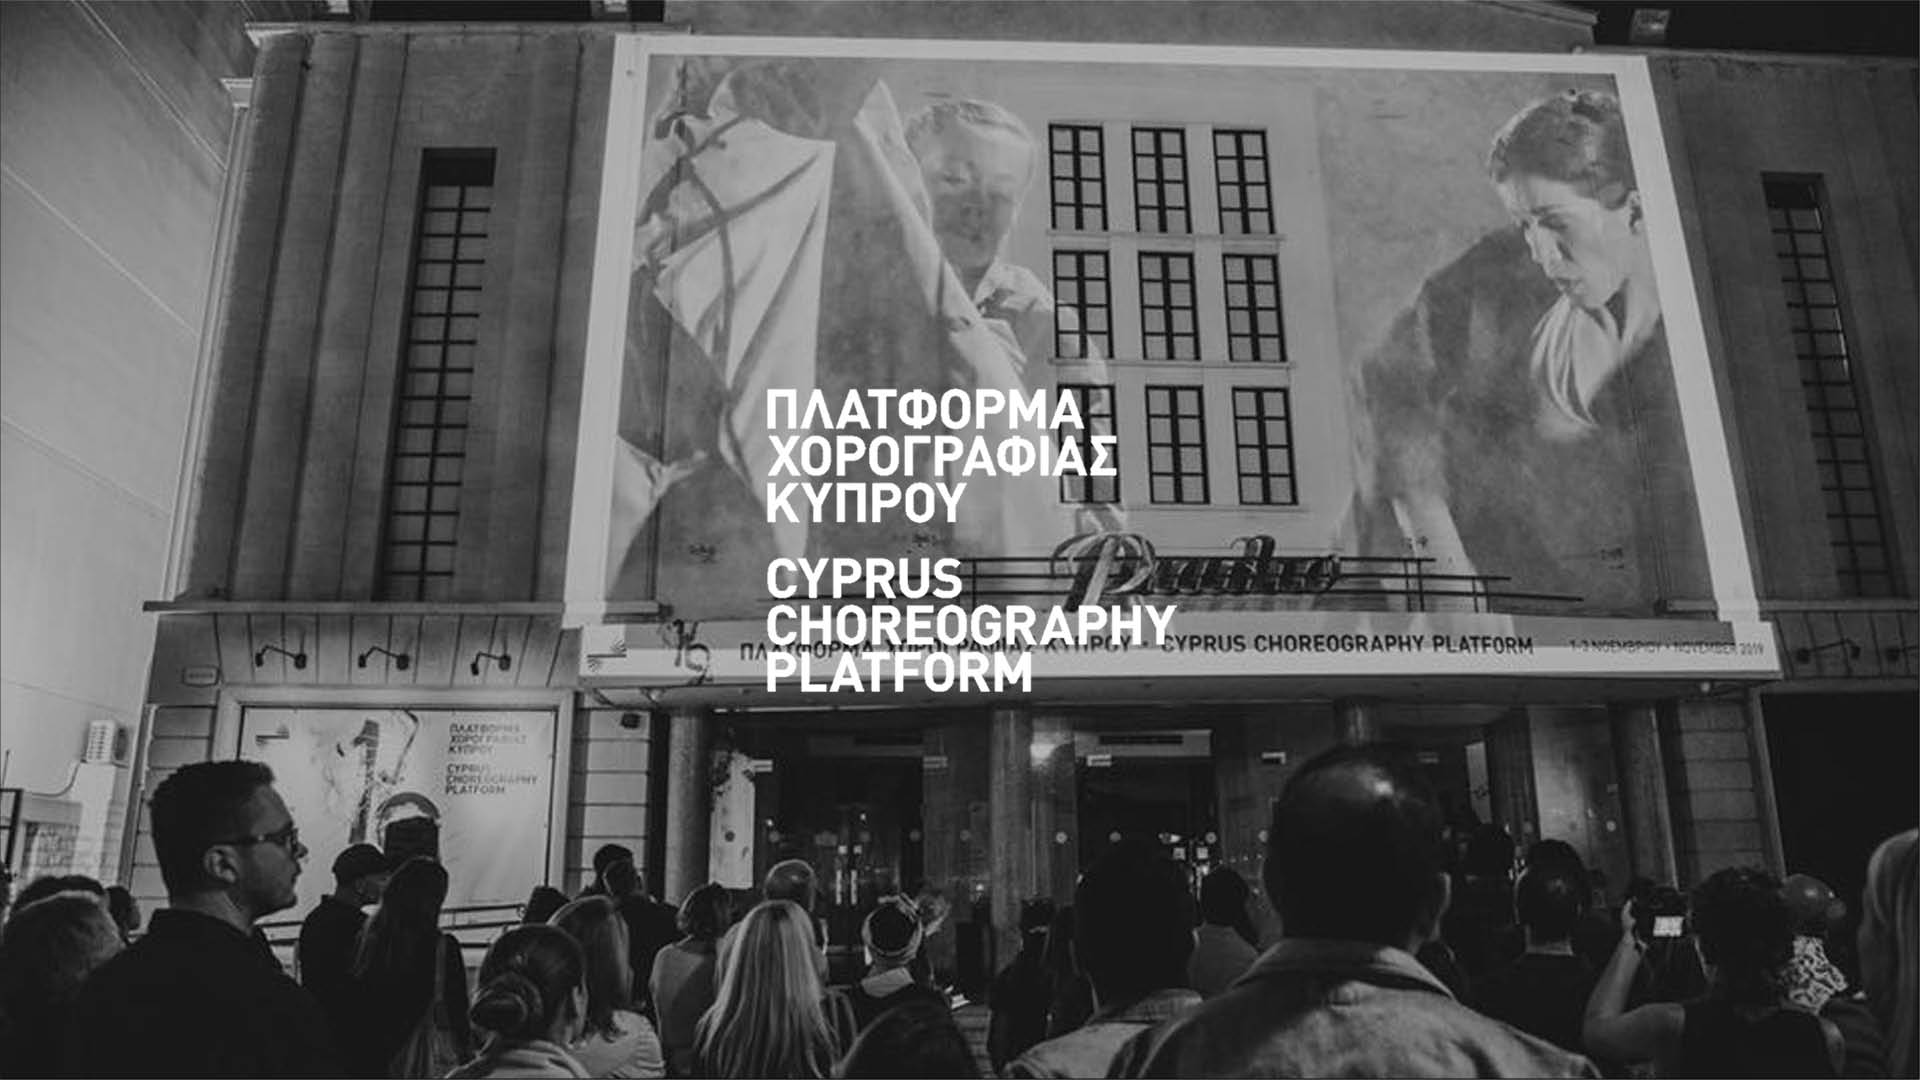 CYPRUS CHOREOGRAPHY PLATFORM